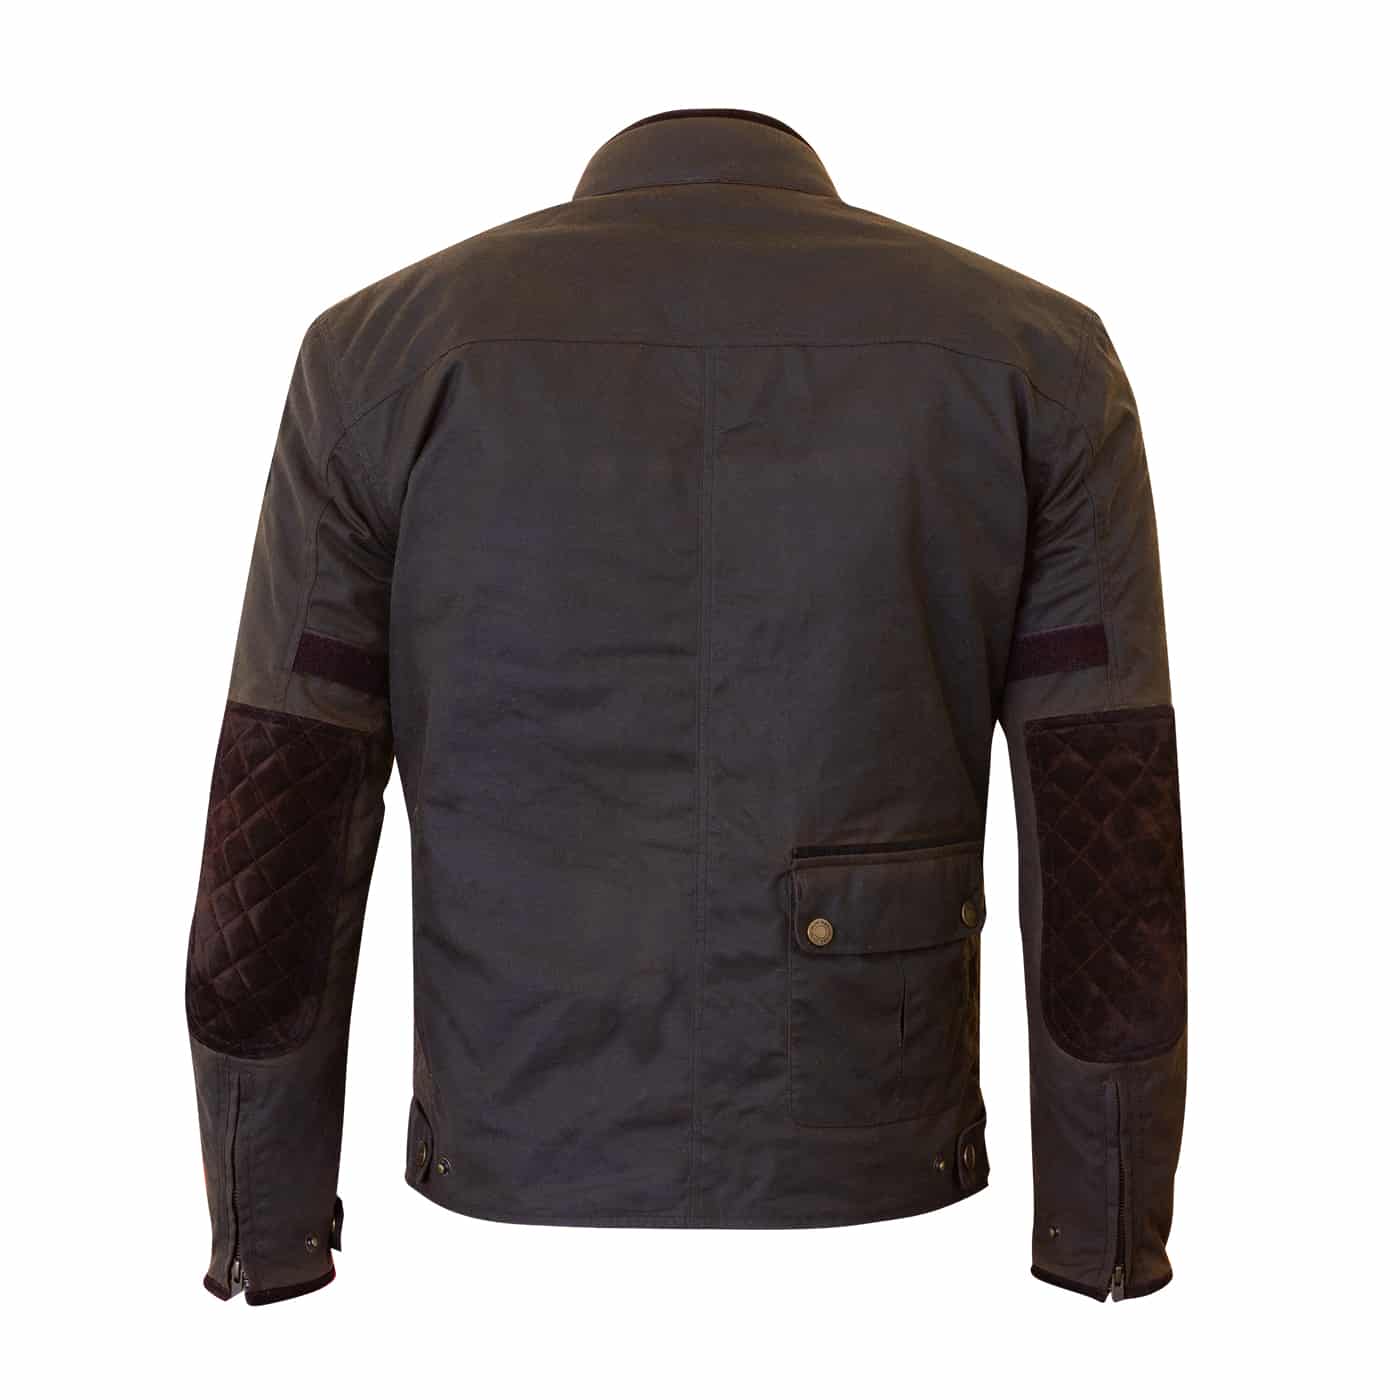 Merlin Bike Gear - Merlin Expedition wax cotton motorcycle jacket